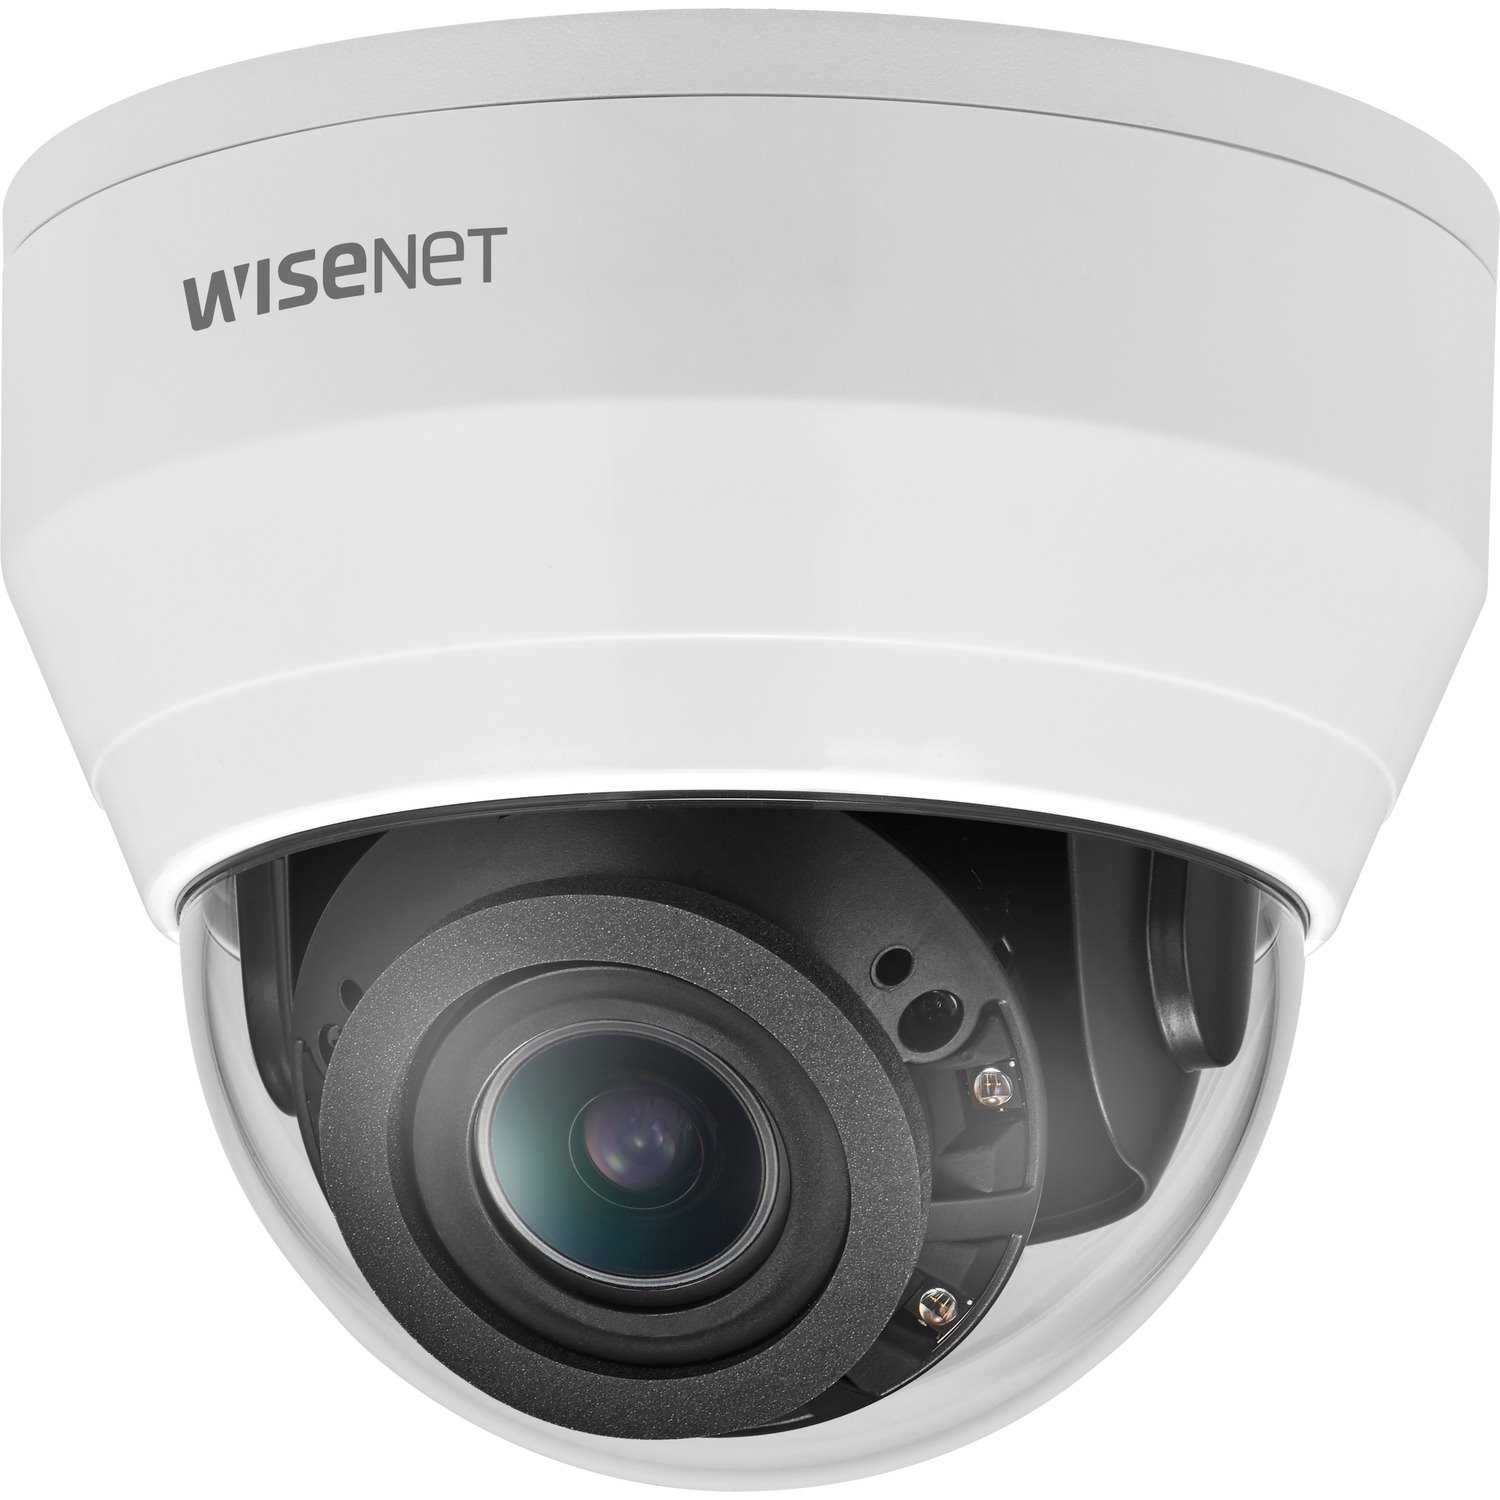 Wisenet QND-8080R 5 Megapixel Indoor Network Camera - Color - Dome